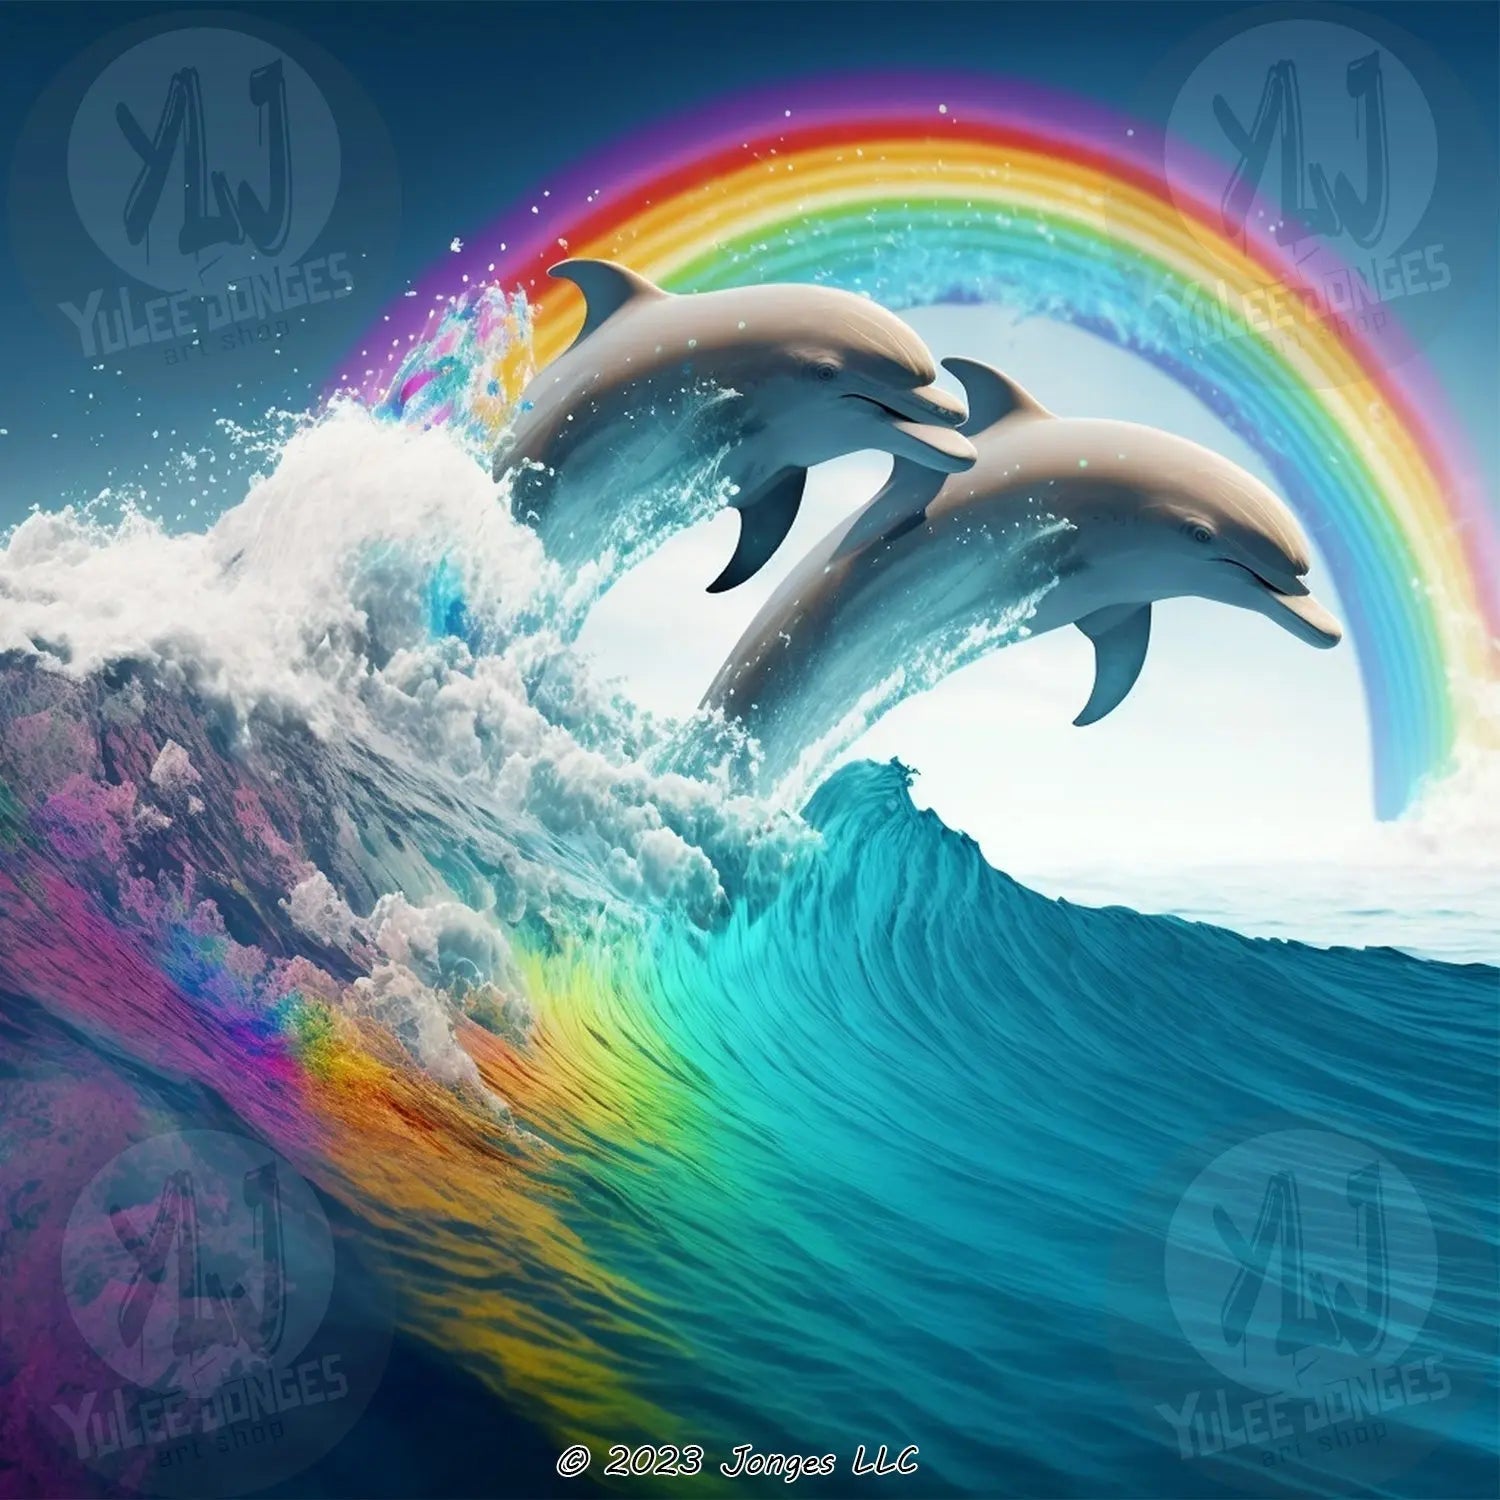 Rainbow Waves of Joy - Full Drill Diamond Painting Kit - YLJ Art Shop - YuLee Jonges